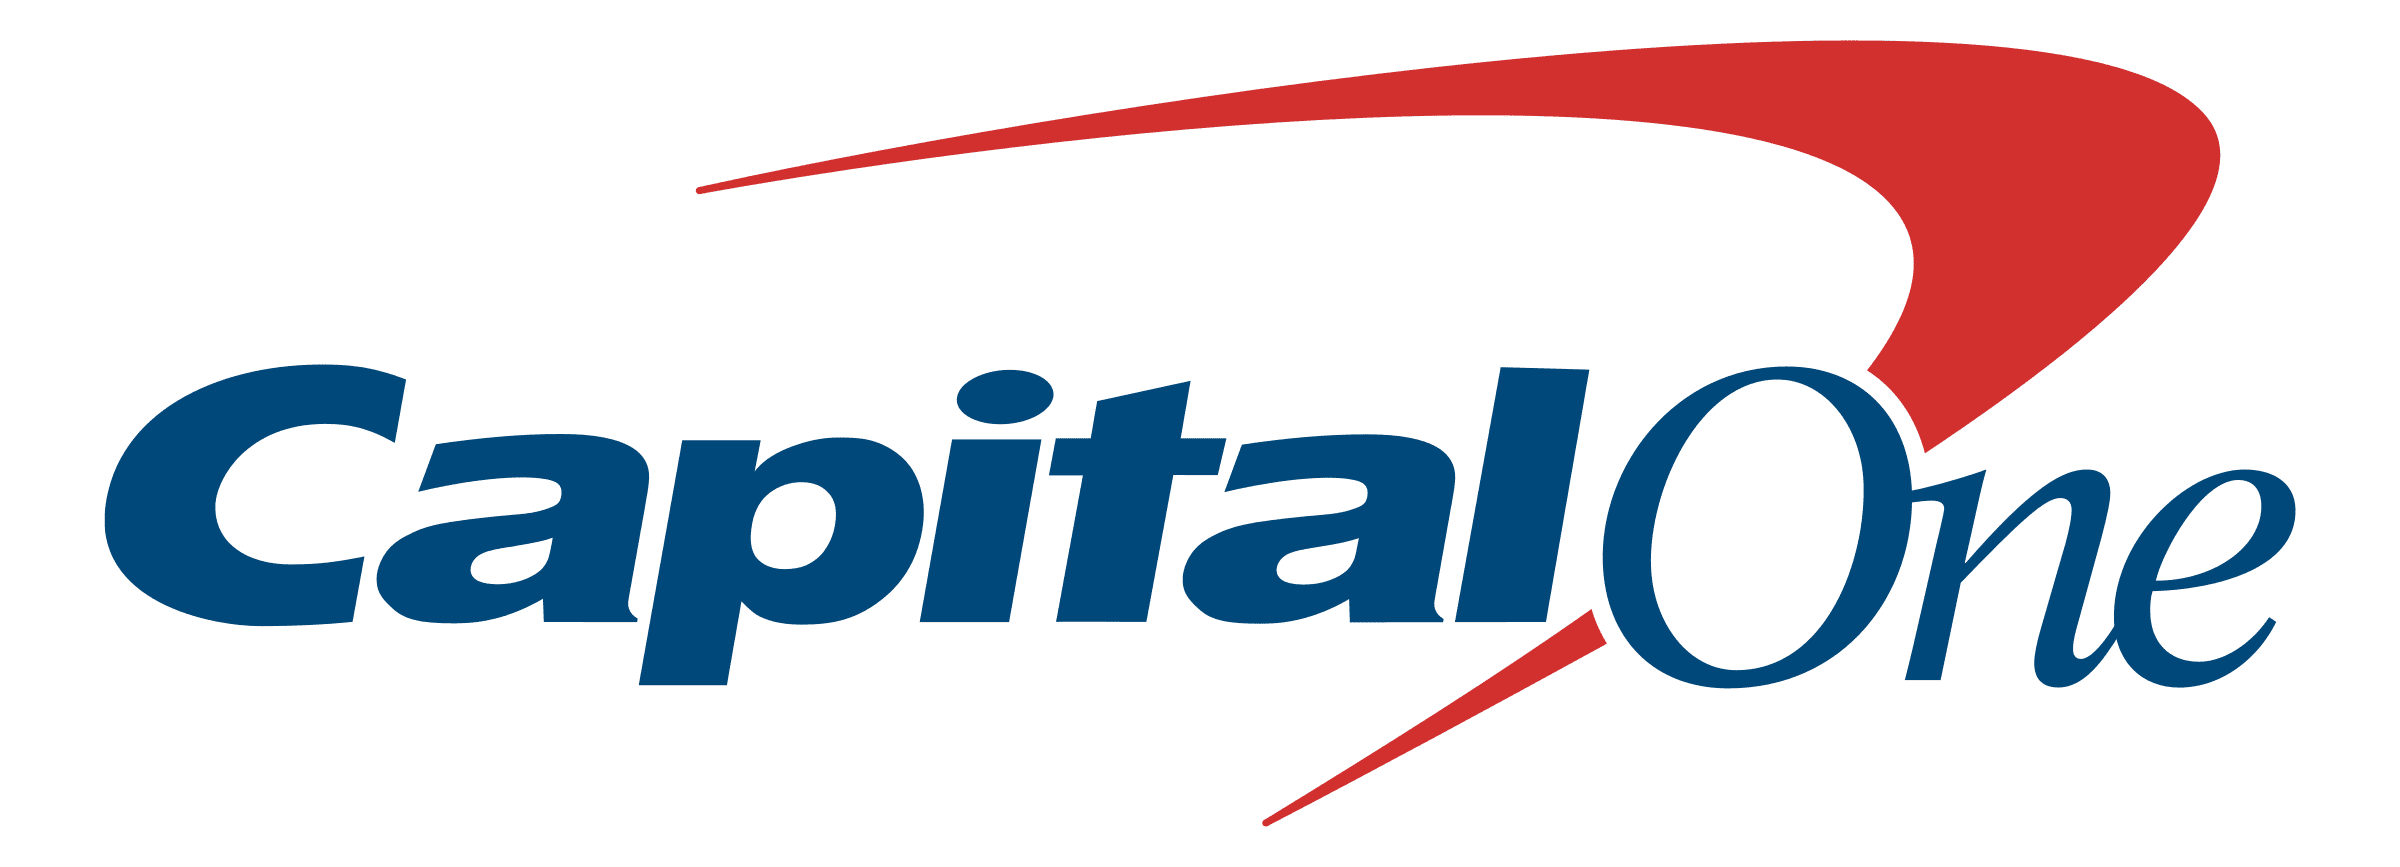 Capital-one-logo-1